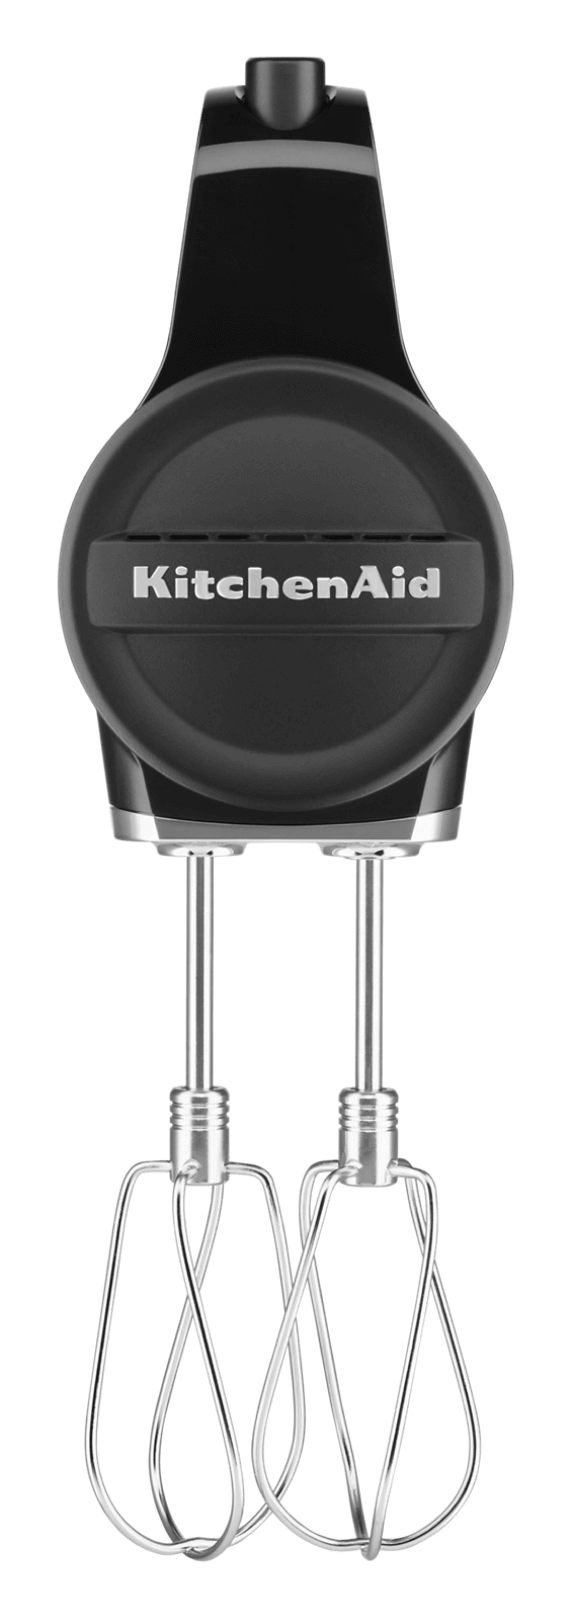 KitchenAid Black Matte Cordless Hand Mixer.